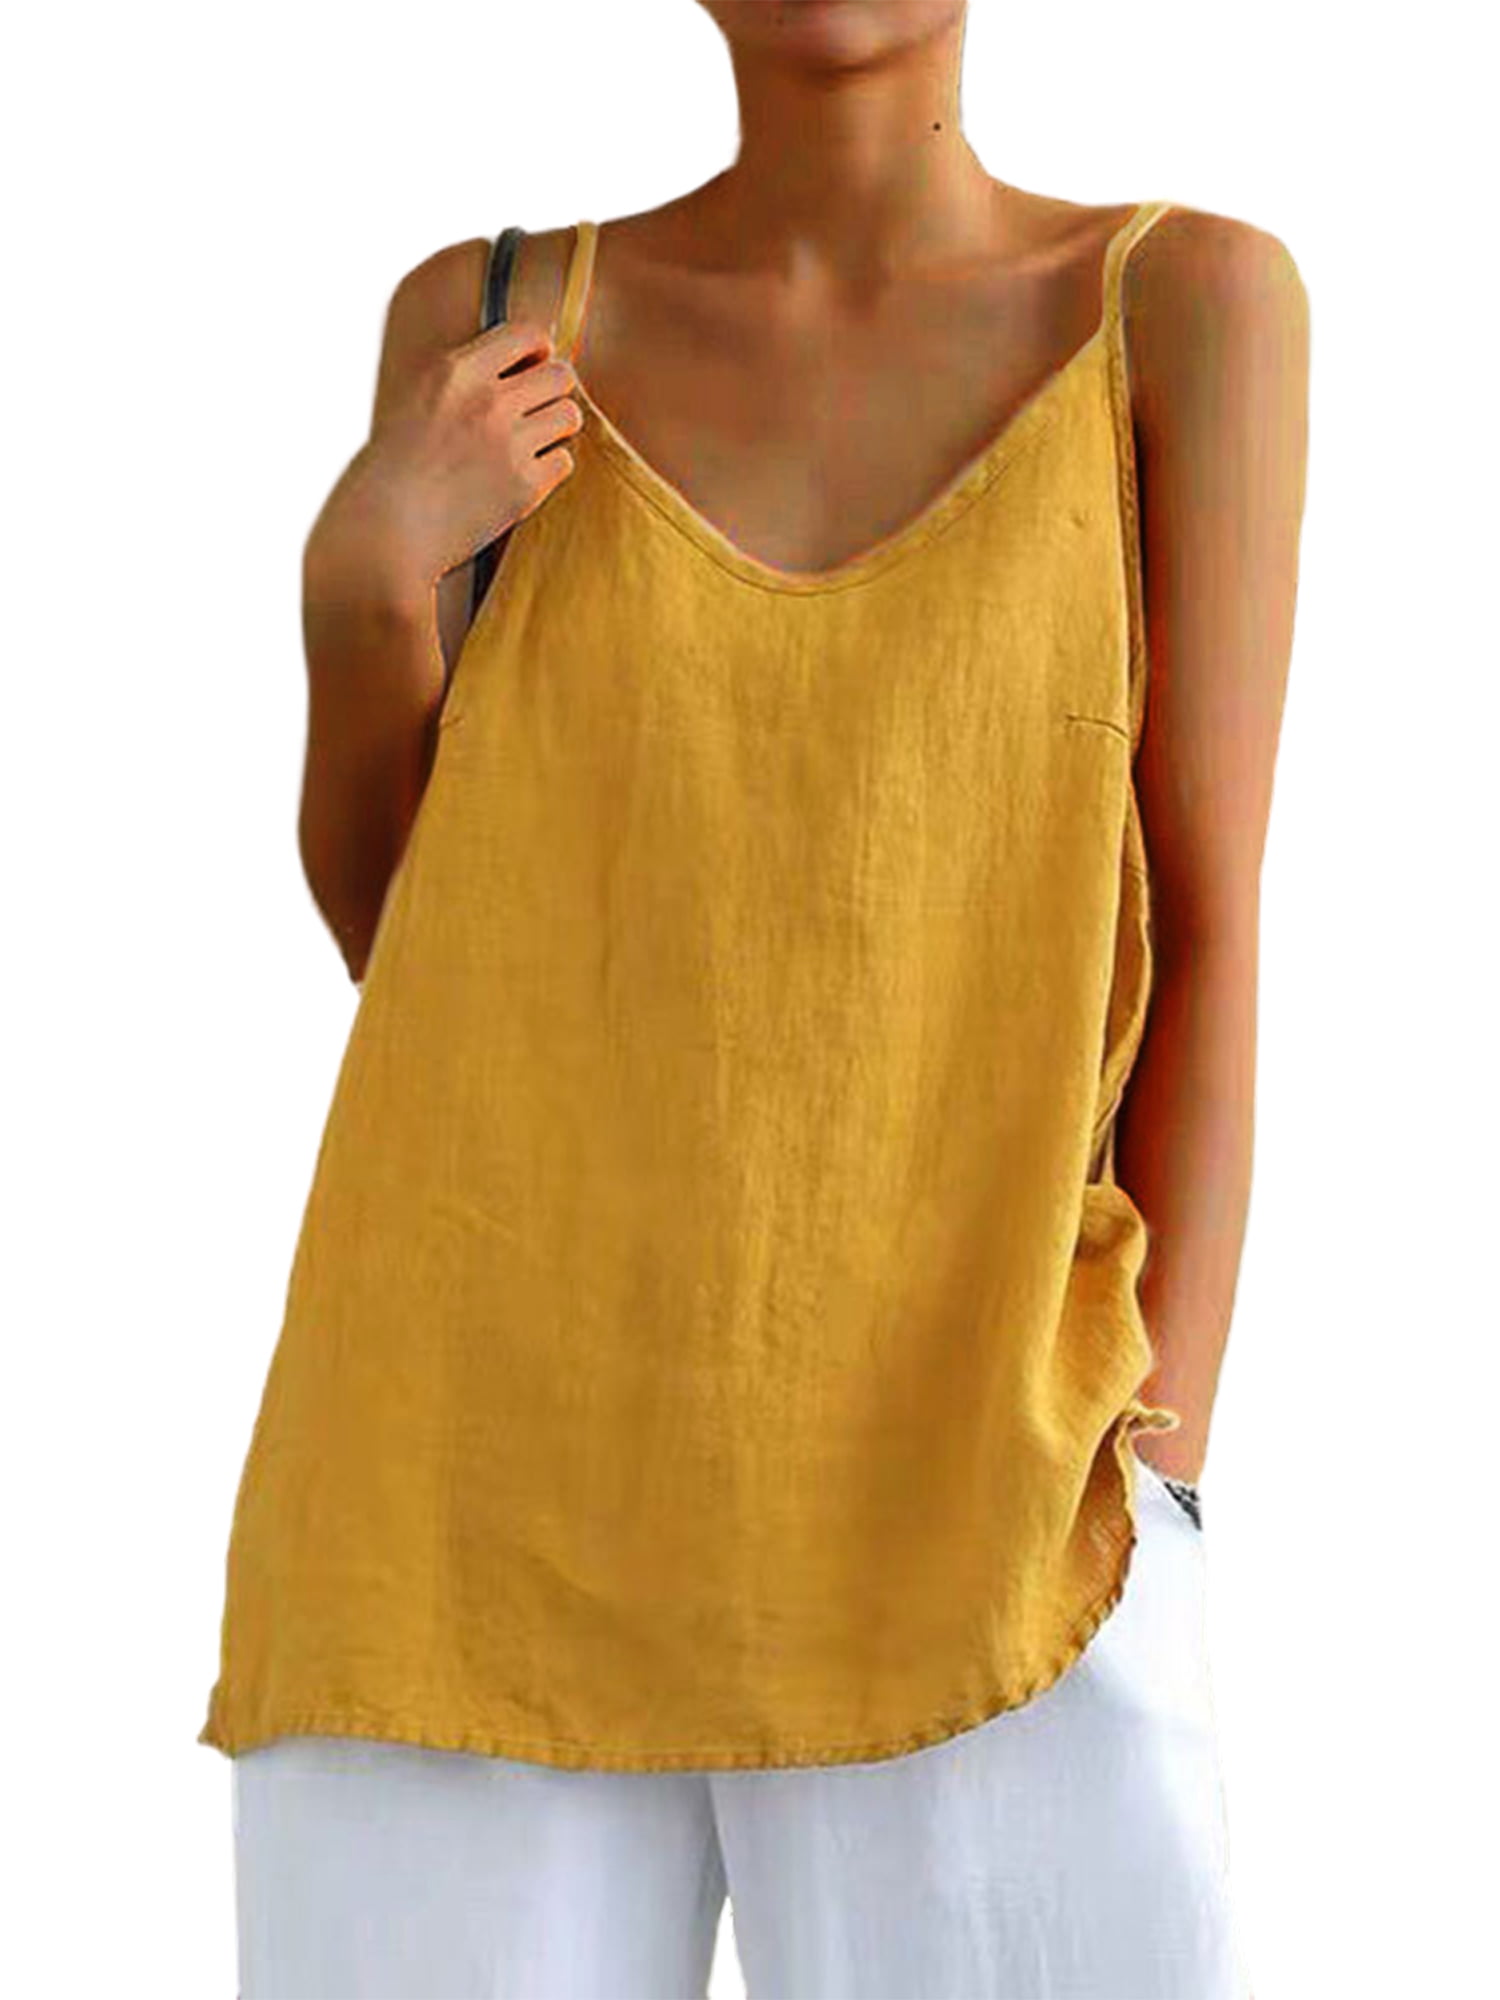 Onderbreking Wijzer Avondeten Glonme Ladies Vest Slip T Shirts Solid Color Tank Tops Party Sexy Blouse  Baggy Sleeveless Summer Top Yellow XL - Walmart.com